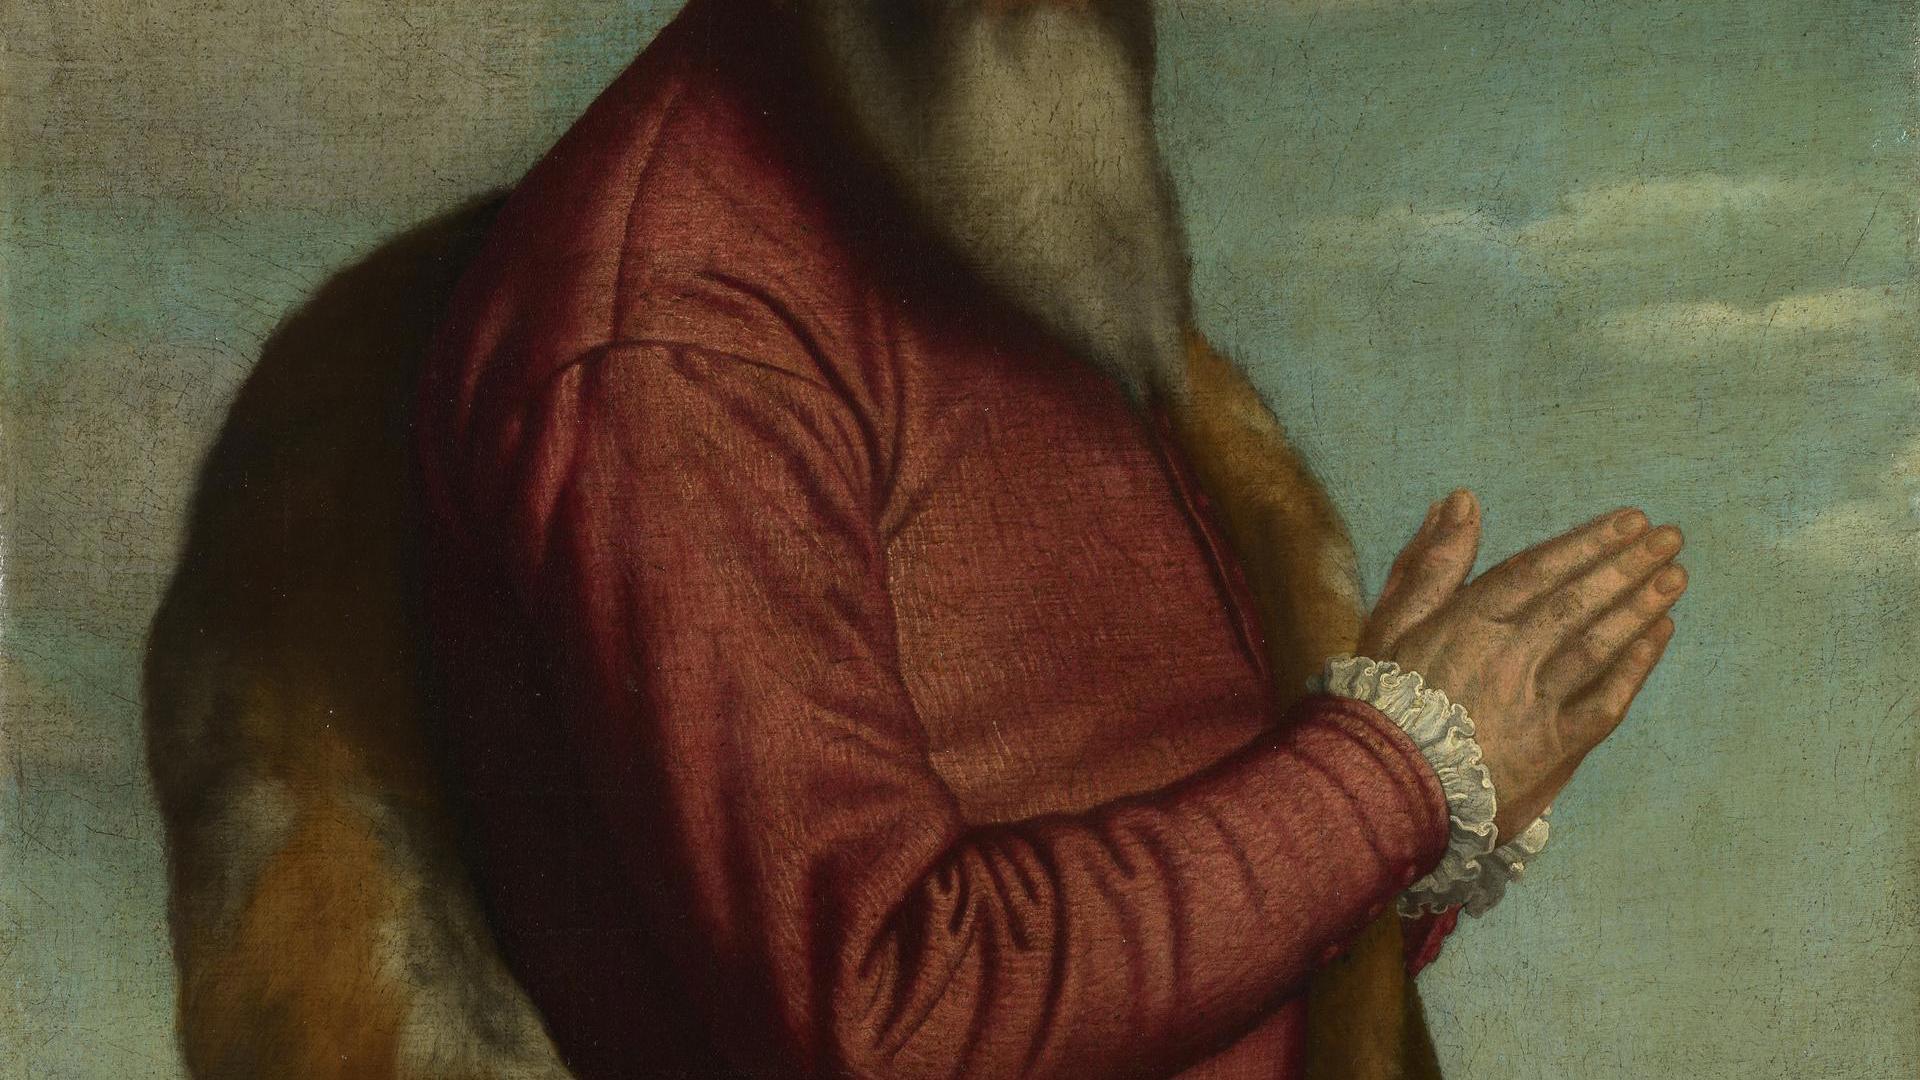 Praying Man with a Long Beard by Moretto da Brescia